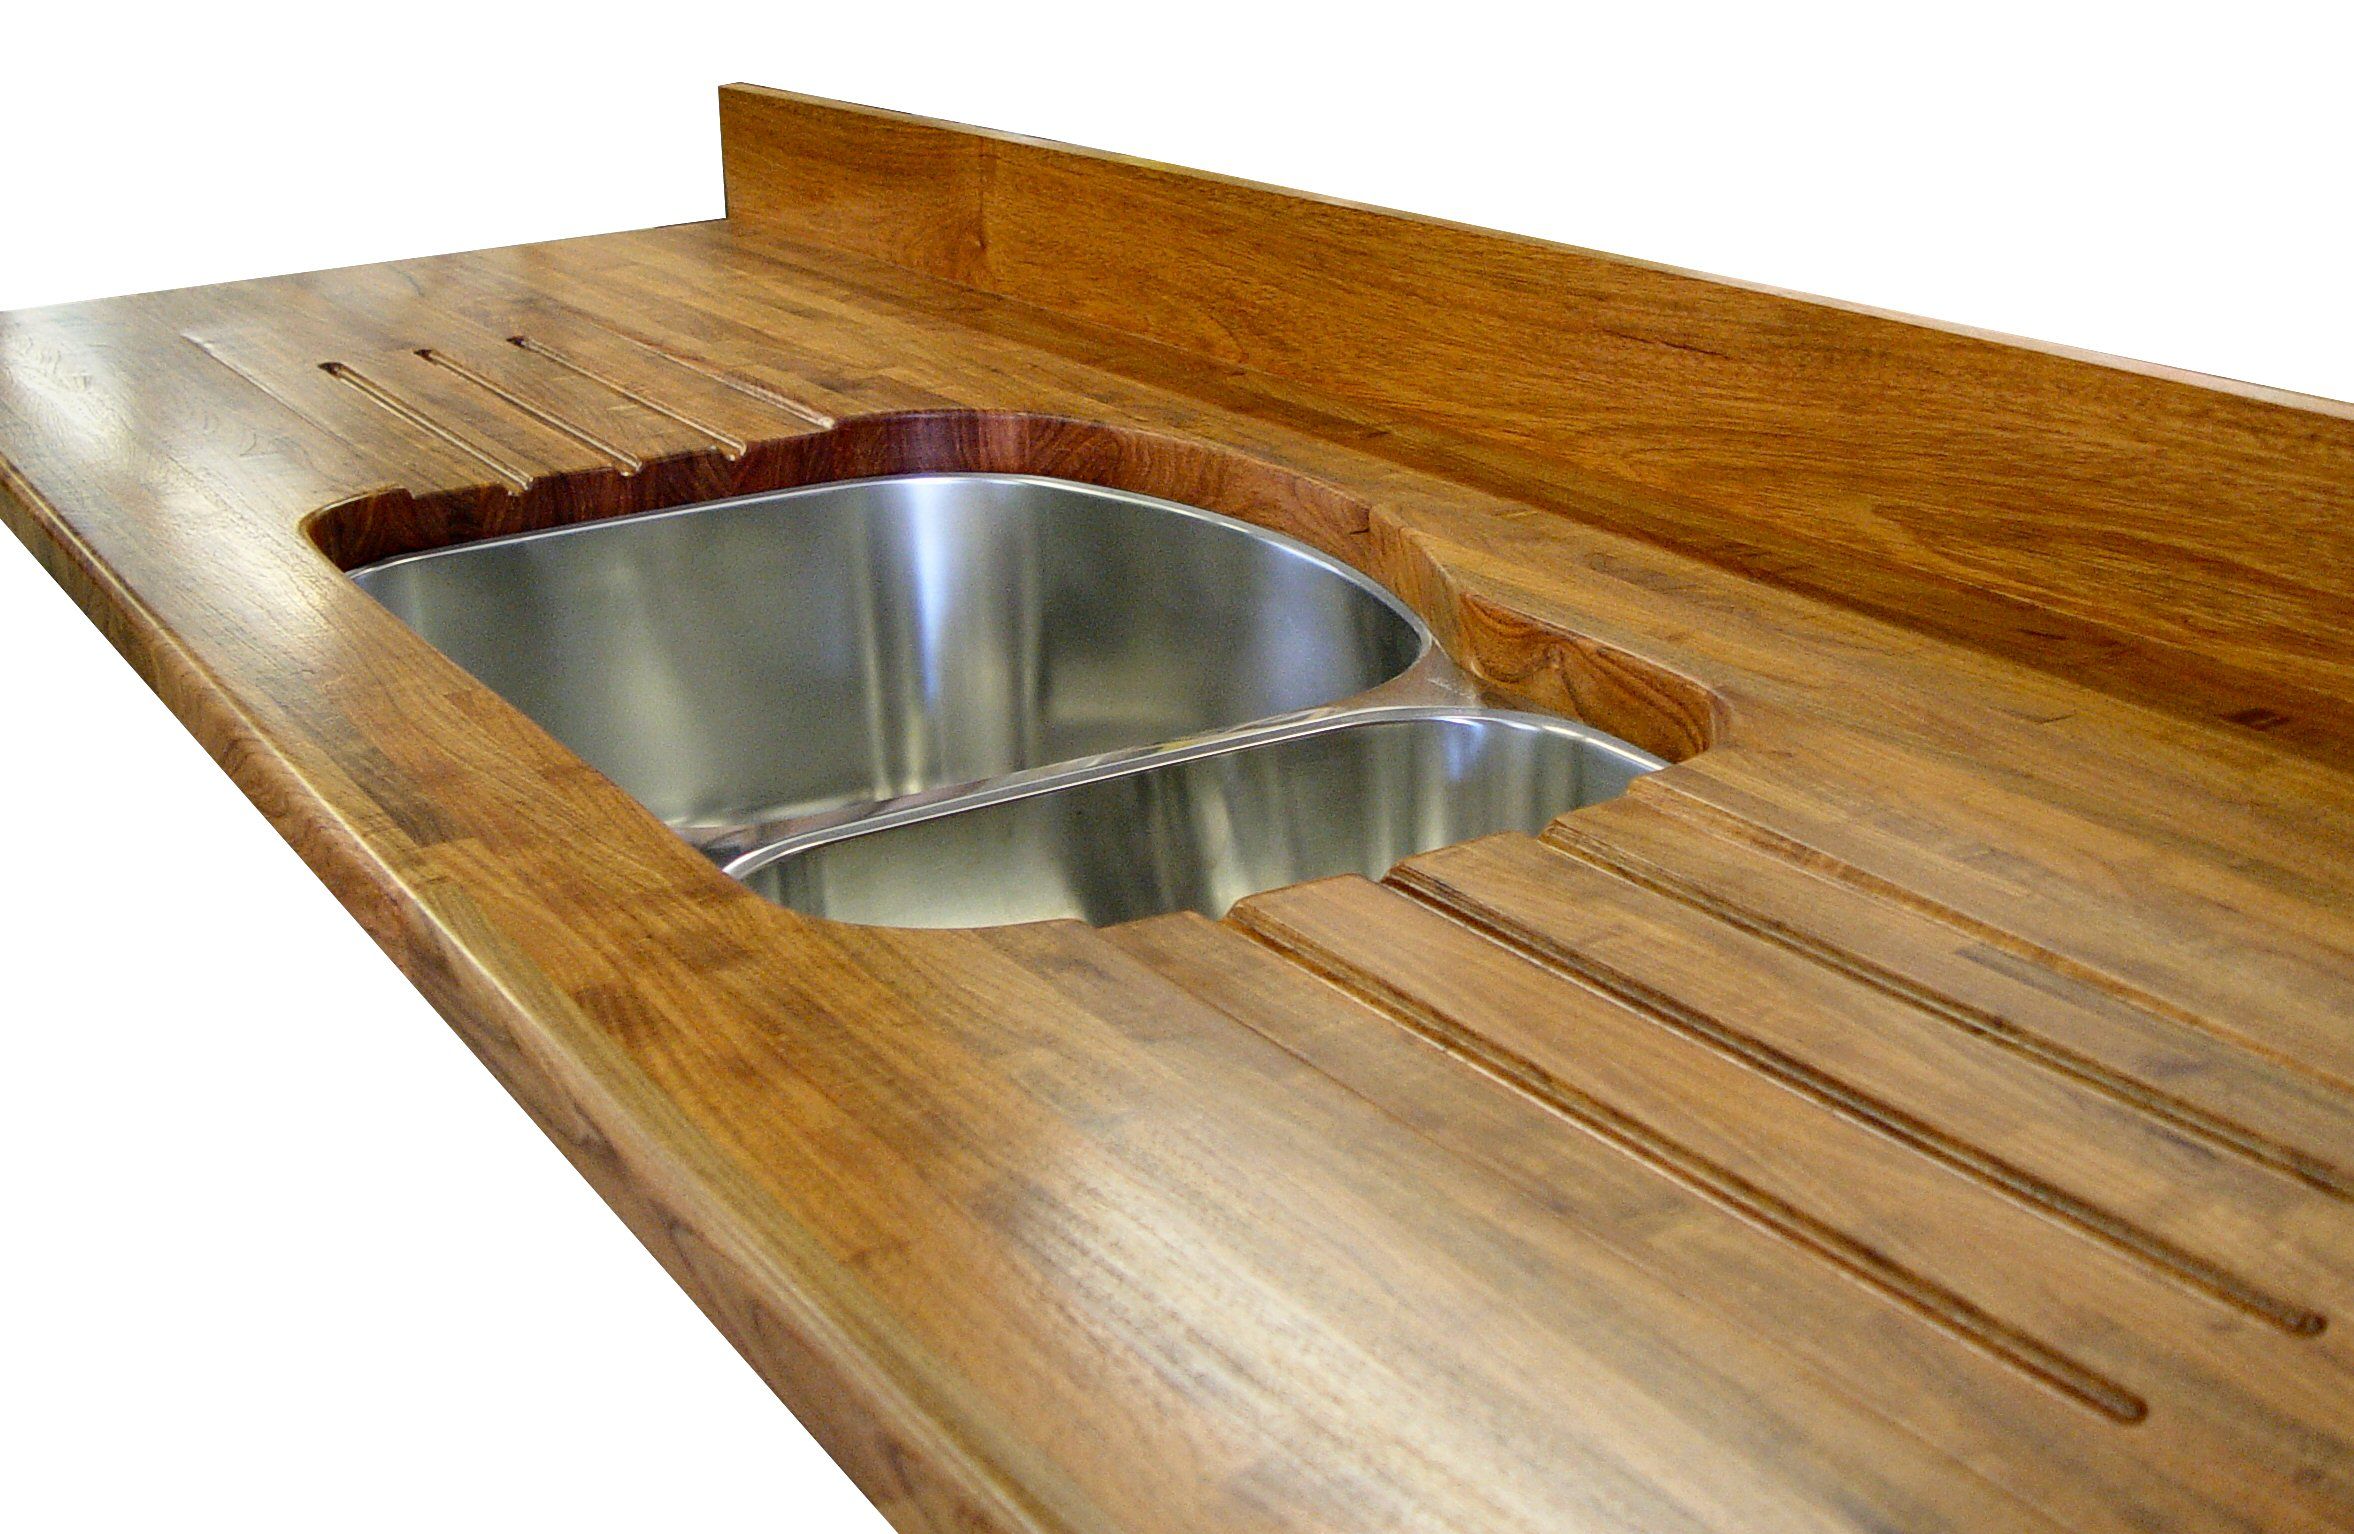 Custom Wood Countertop Options - Drainboards